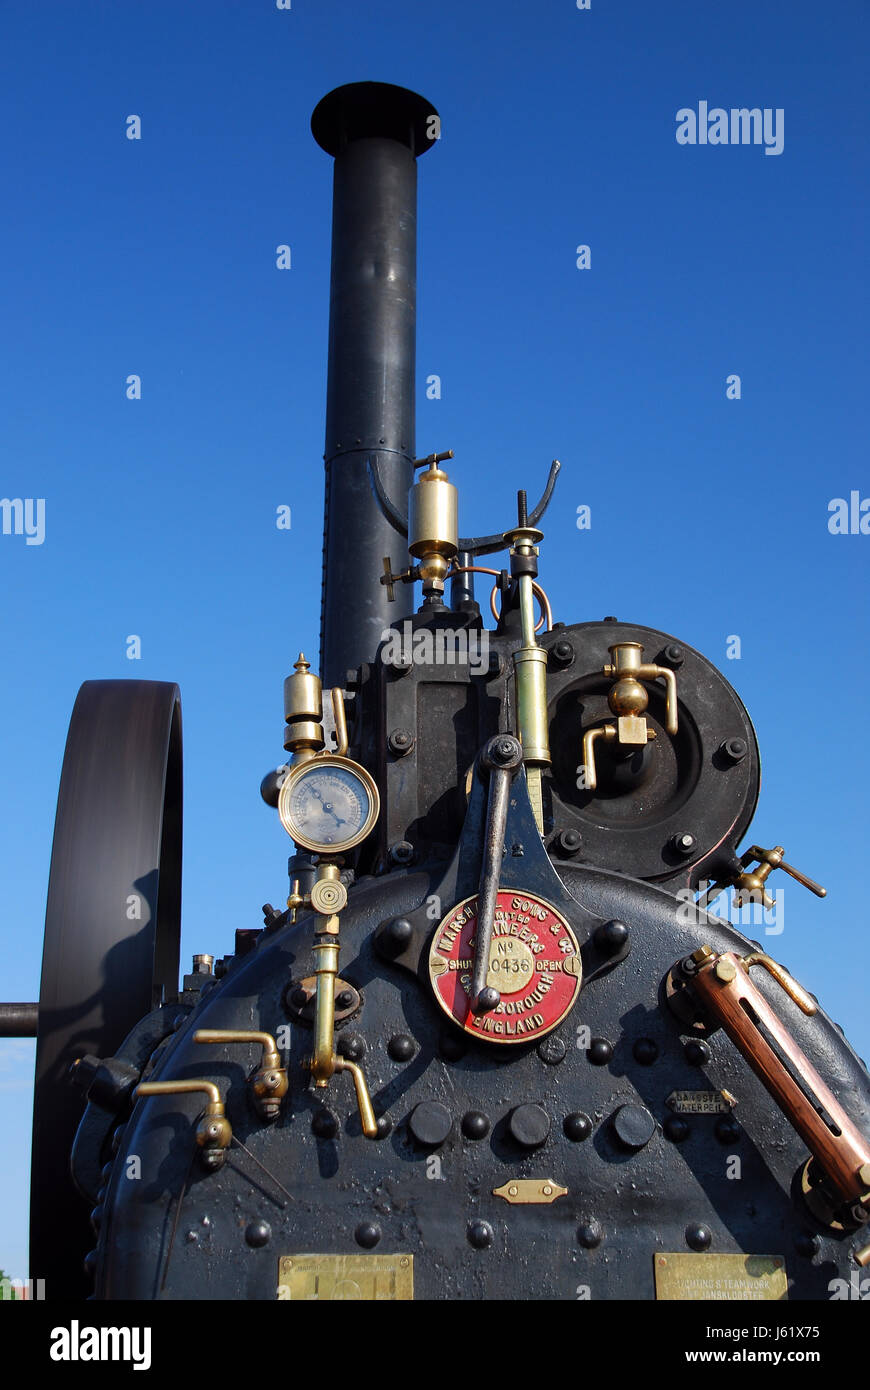 smoke smoking smokes fume railway locomotive train engine rolling stock vehicle Stock Photo